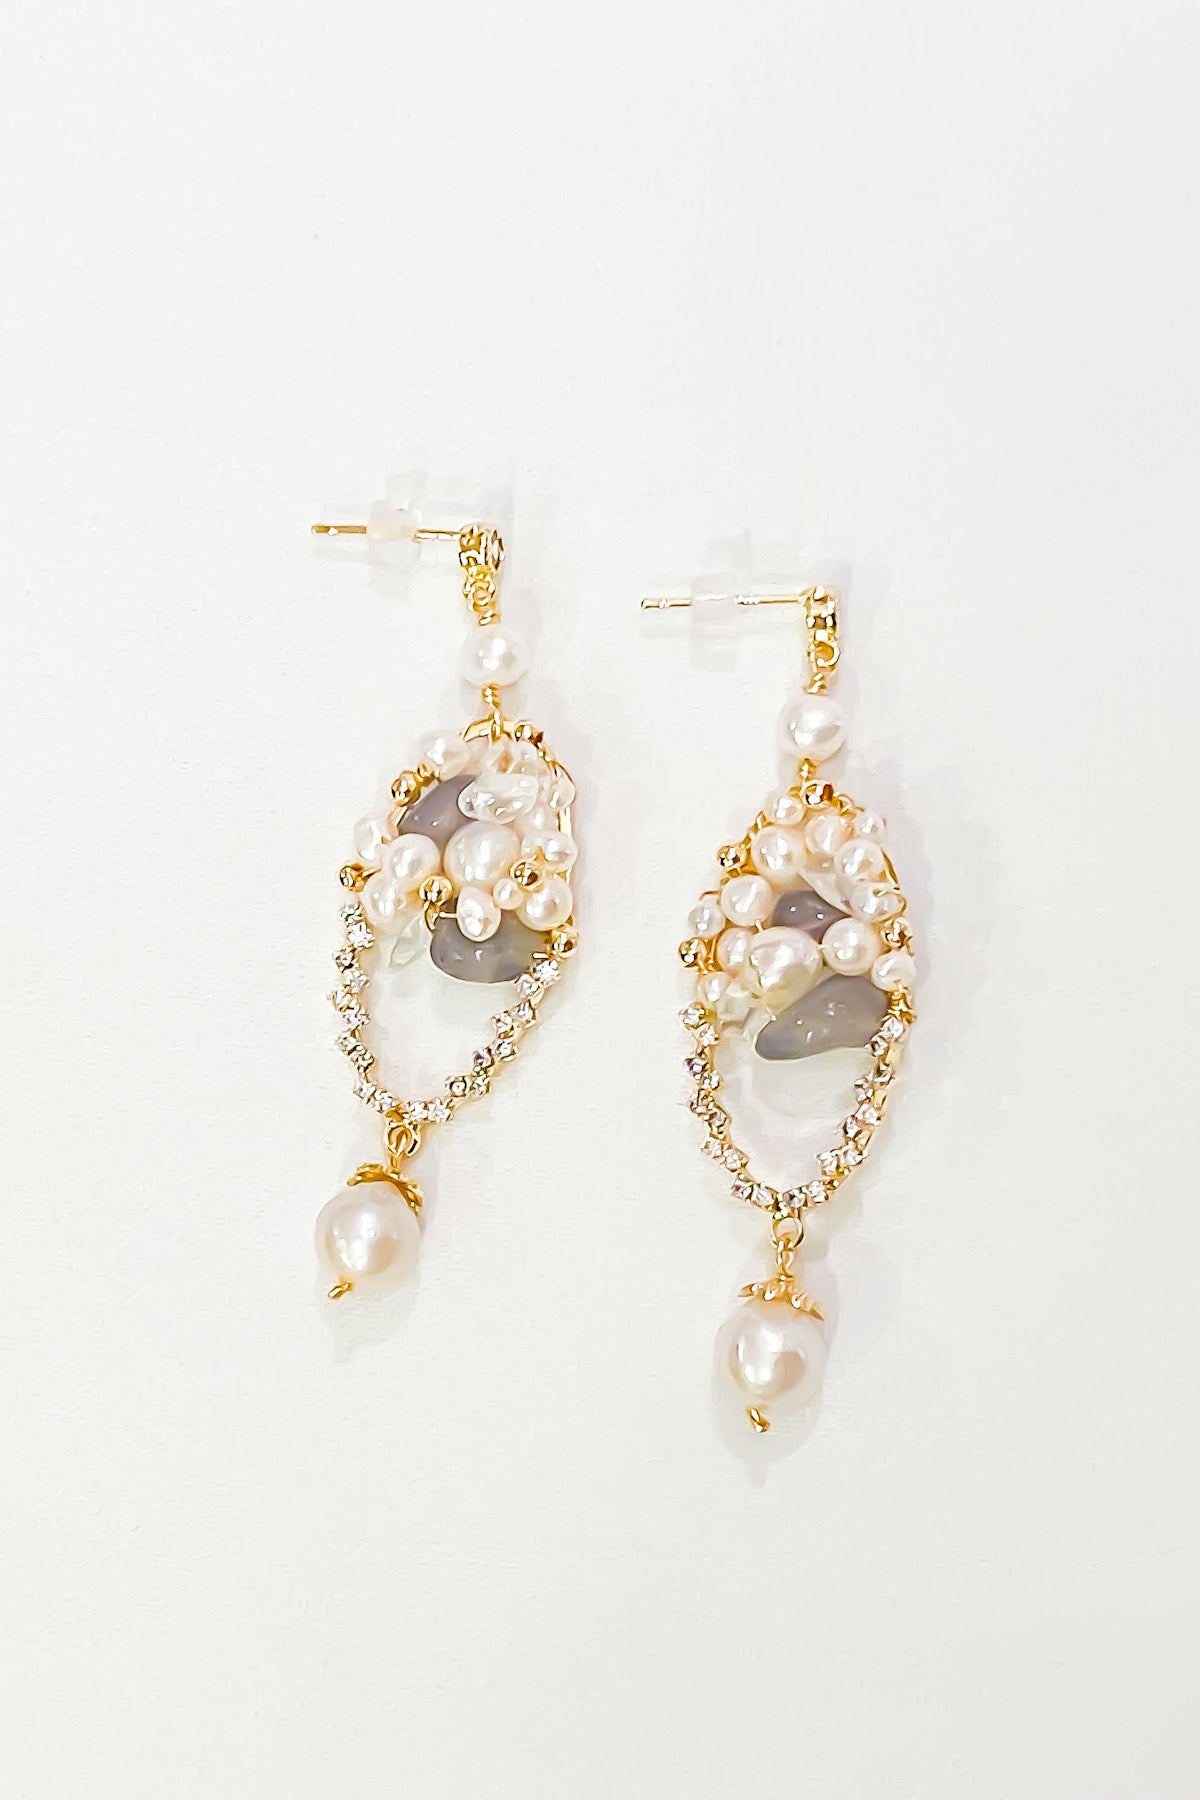 SKYE San Francisco Shop SF Chic Modern Elegant Classy Women Jewelry French Parisian Minimalist Marquis 18K Gold Crystal Pearl Earrings 2